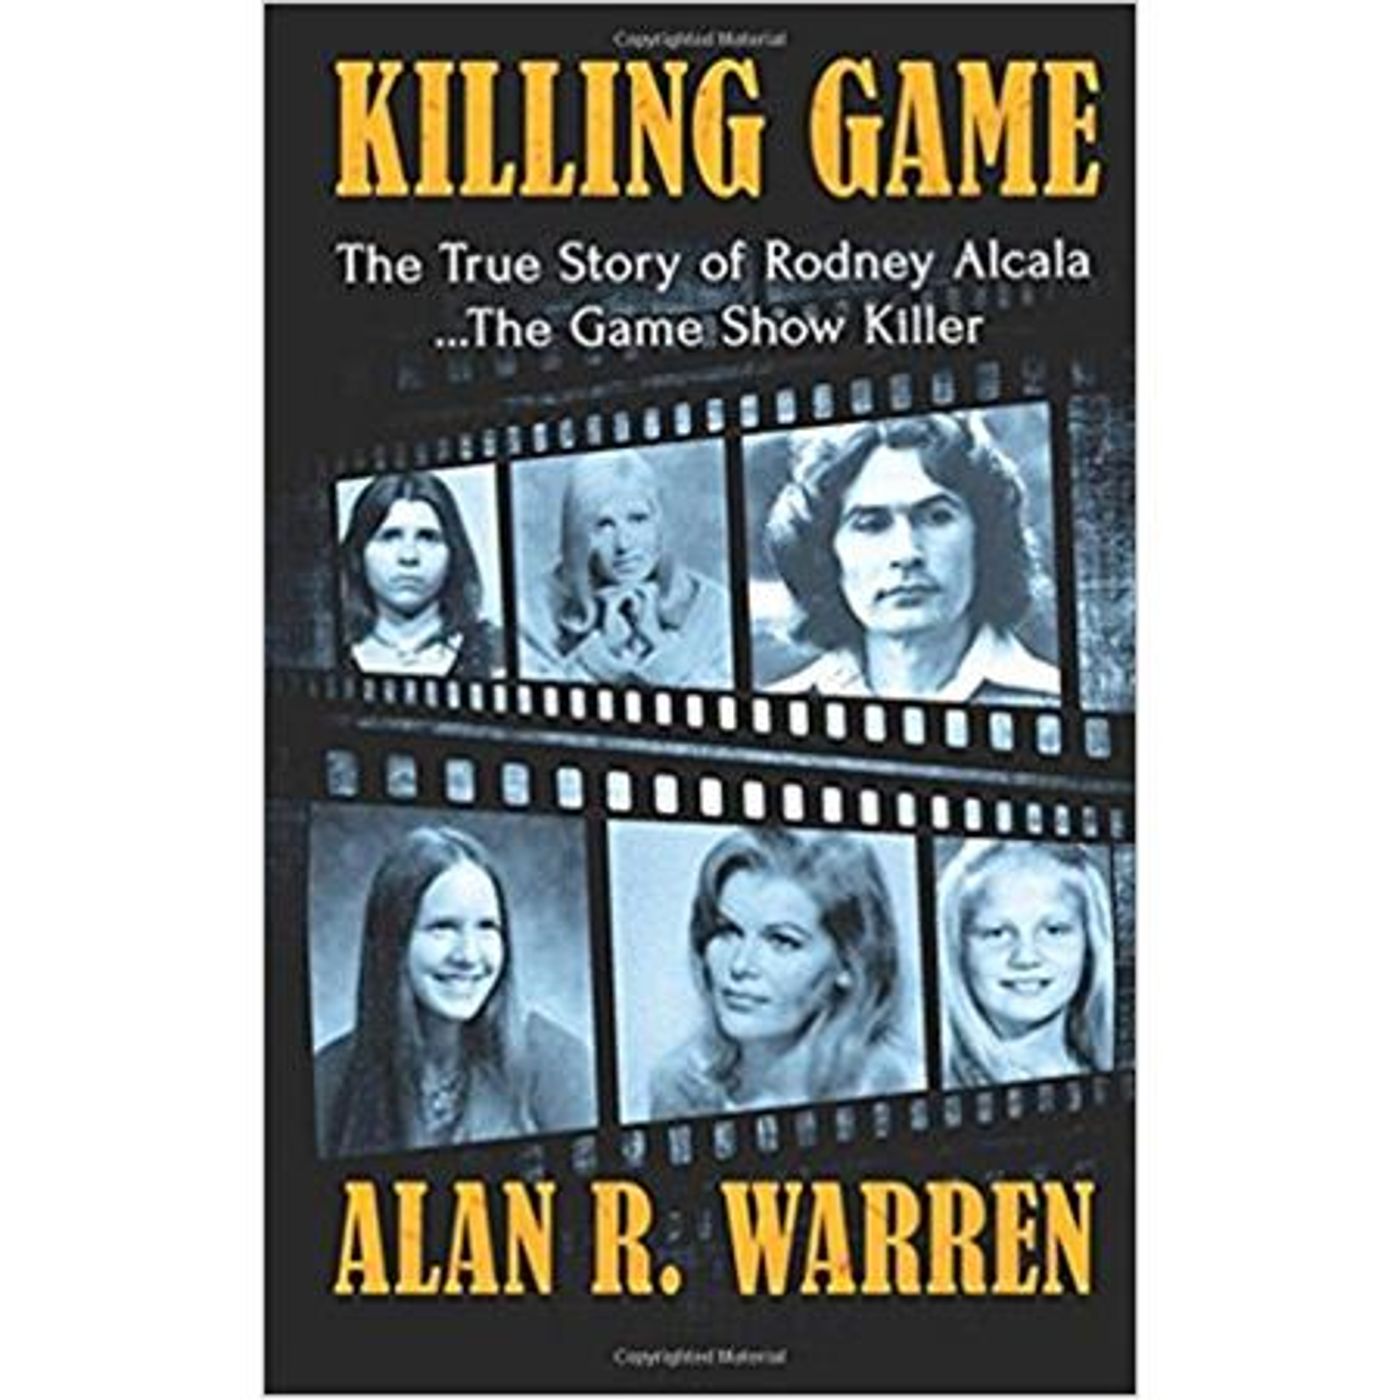 THE KILLING GAME- Alan R. Warren